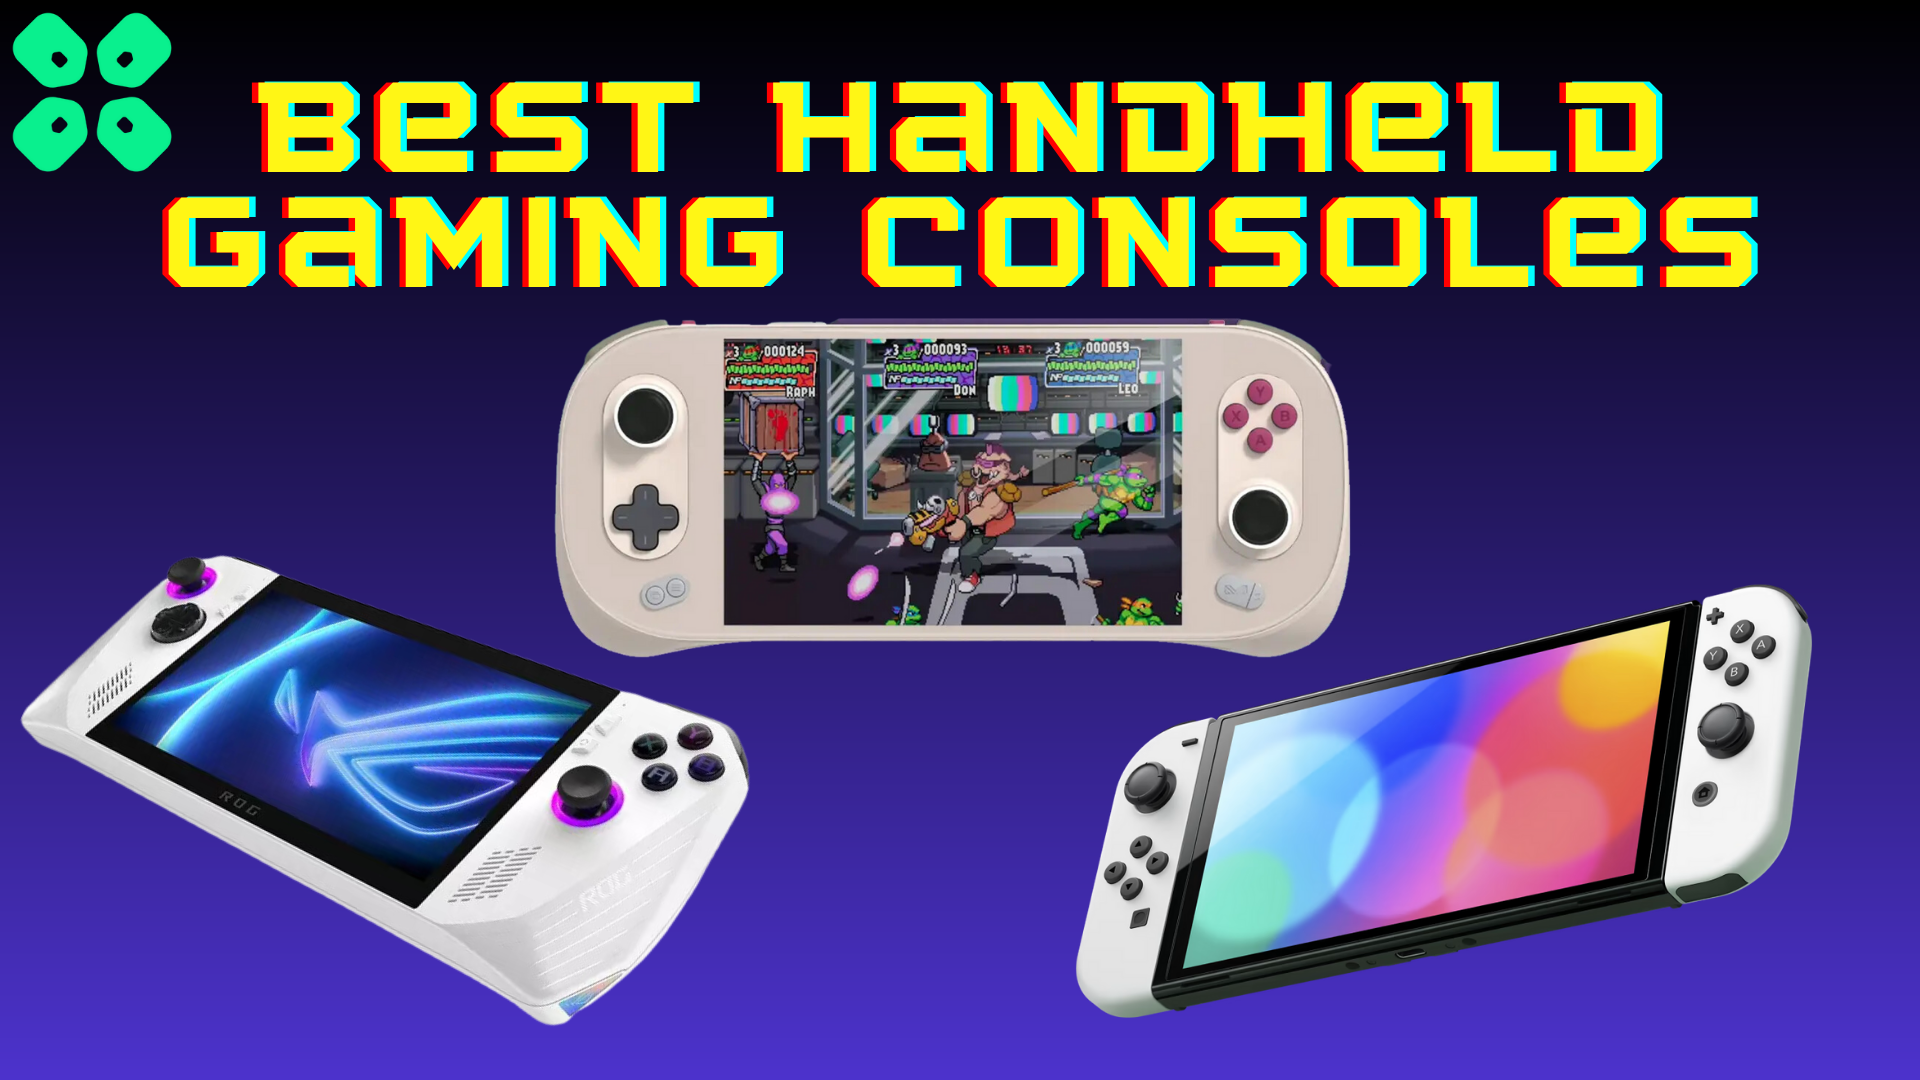 5 Best Handheld Gaming Consoles